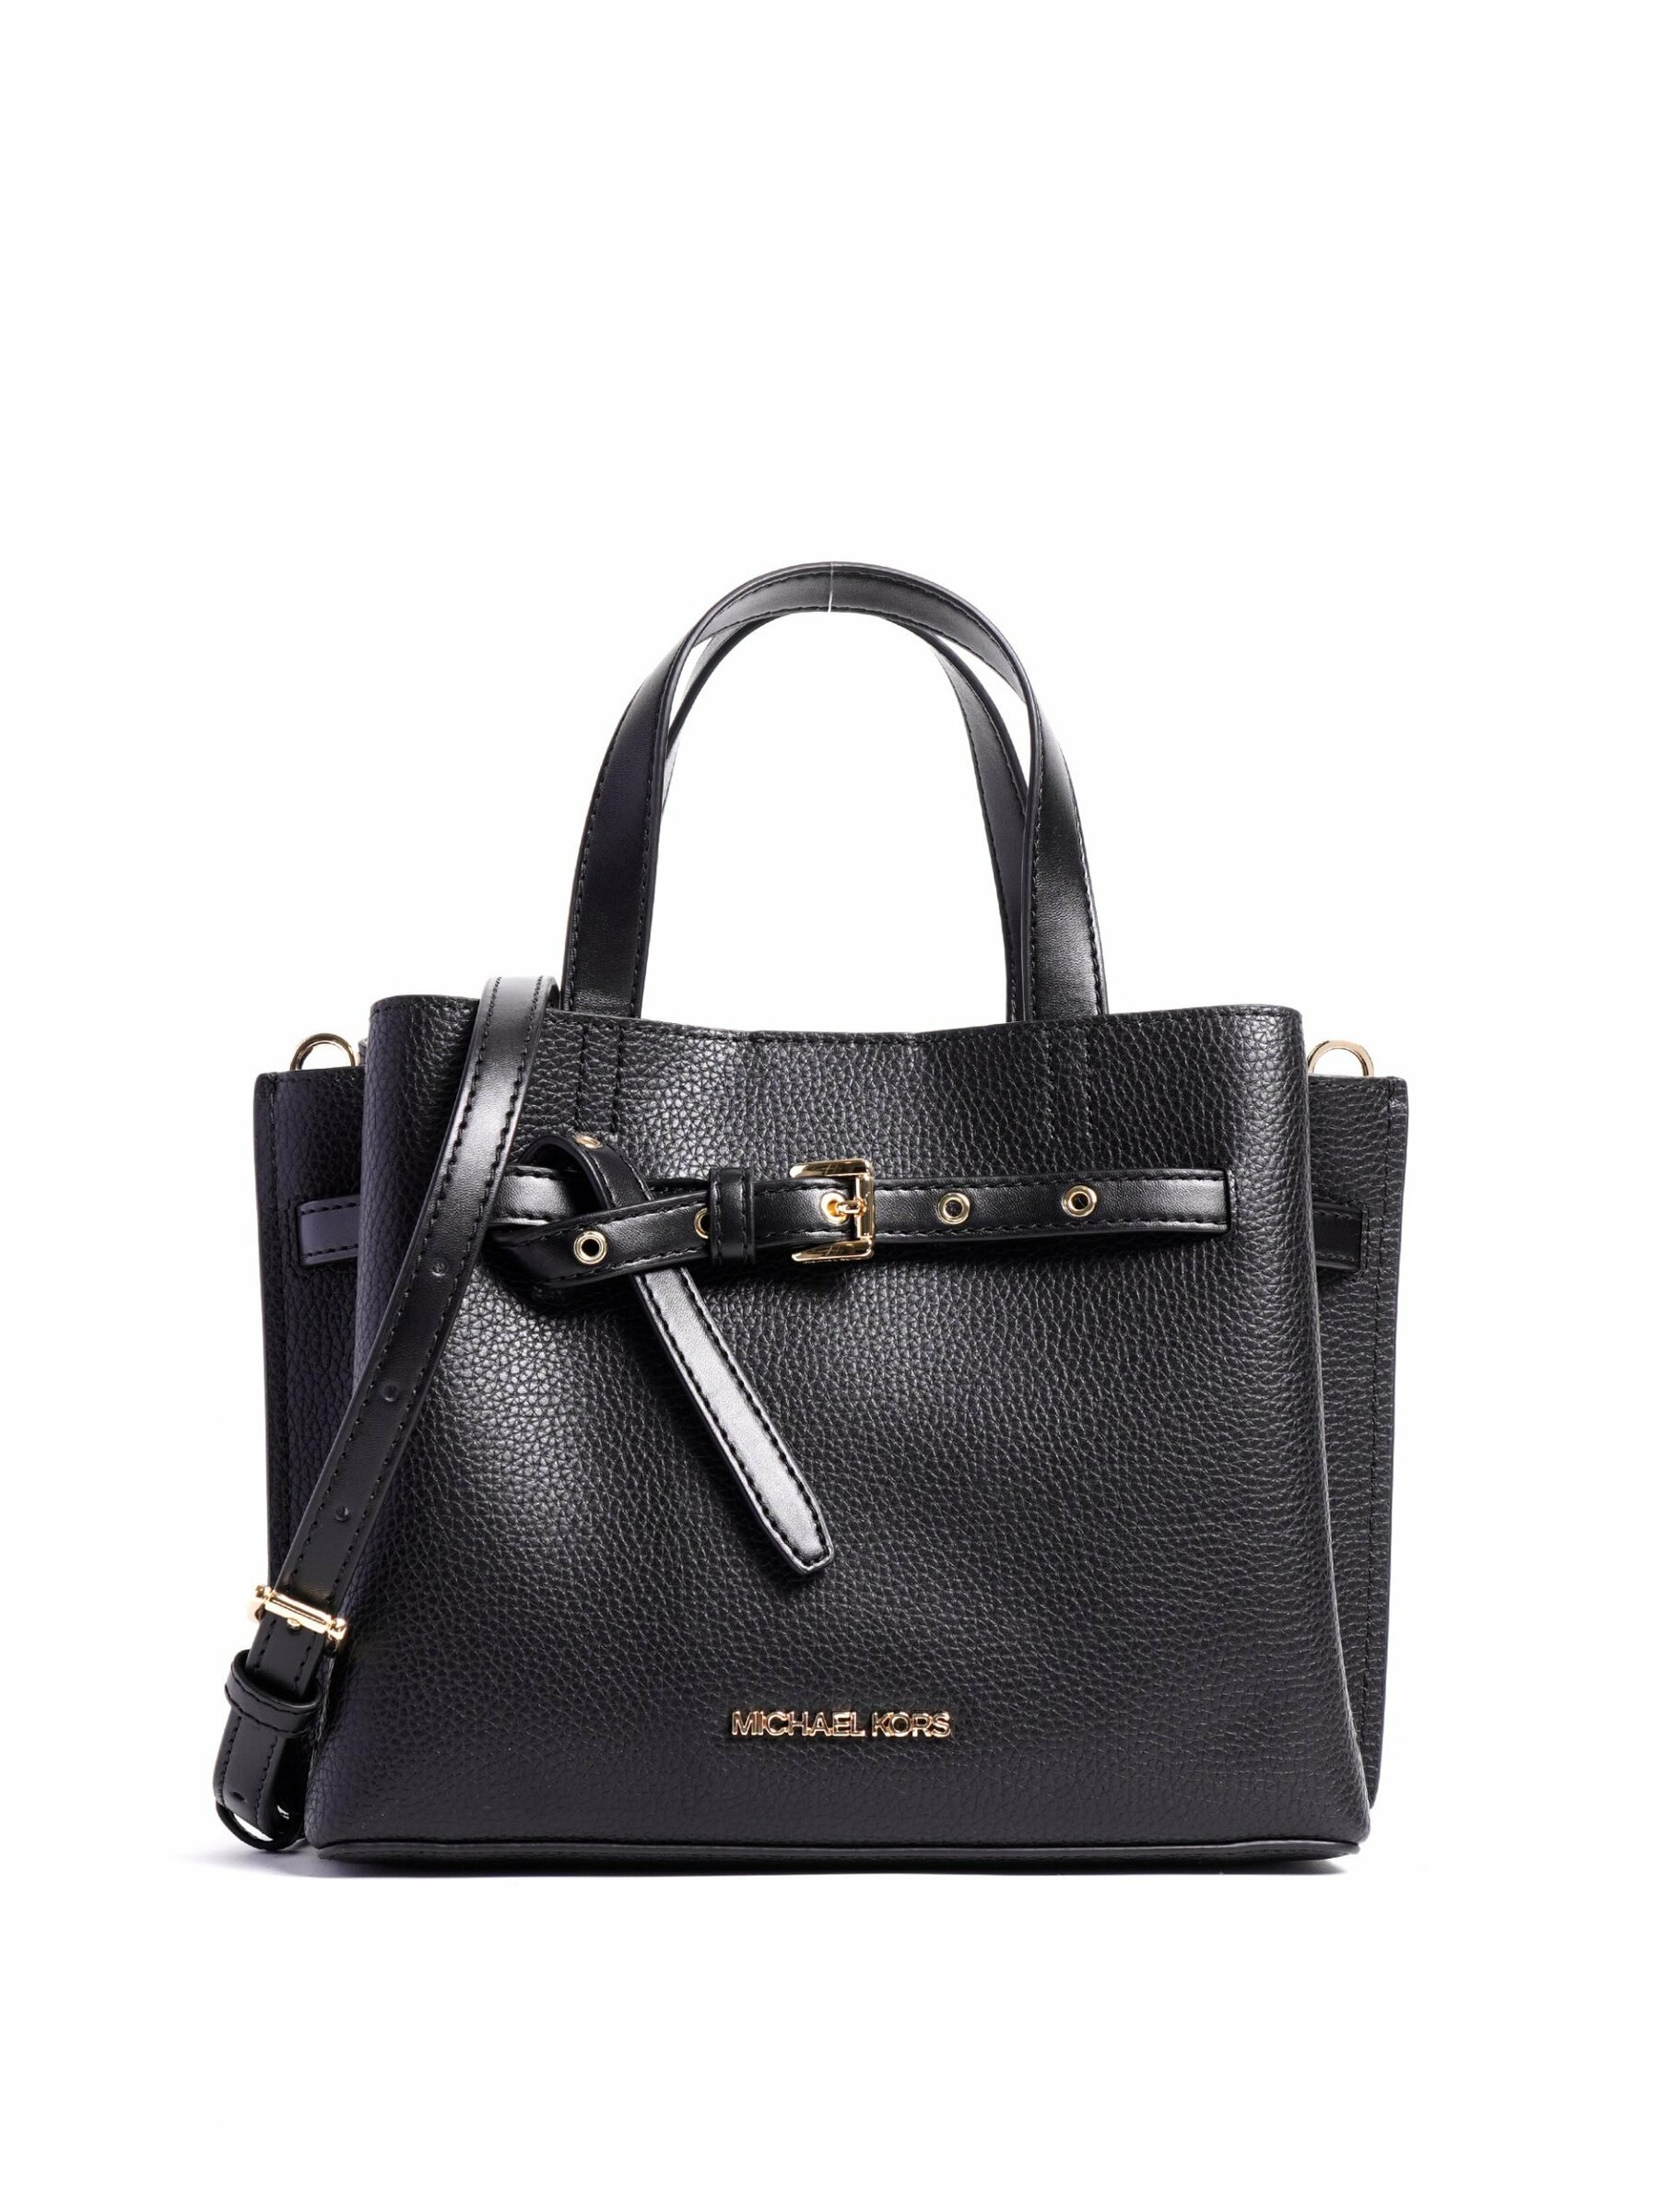 Michael Kors Emilia Small Satchel Crossbody Bag Black Pebbled Leather 